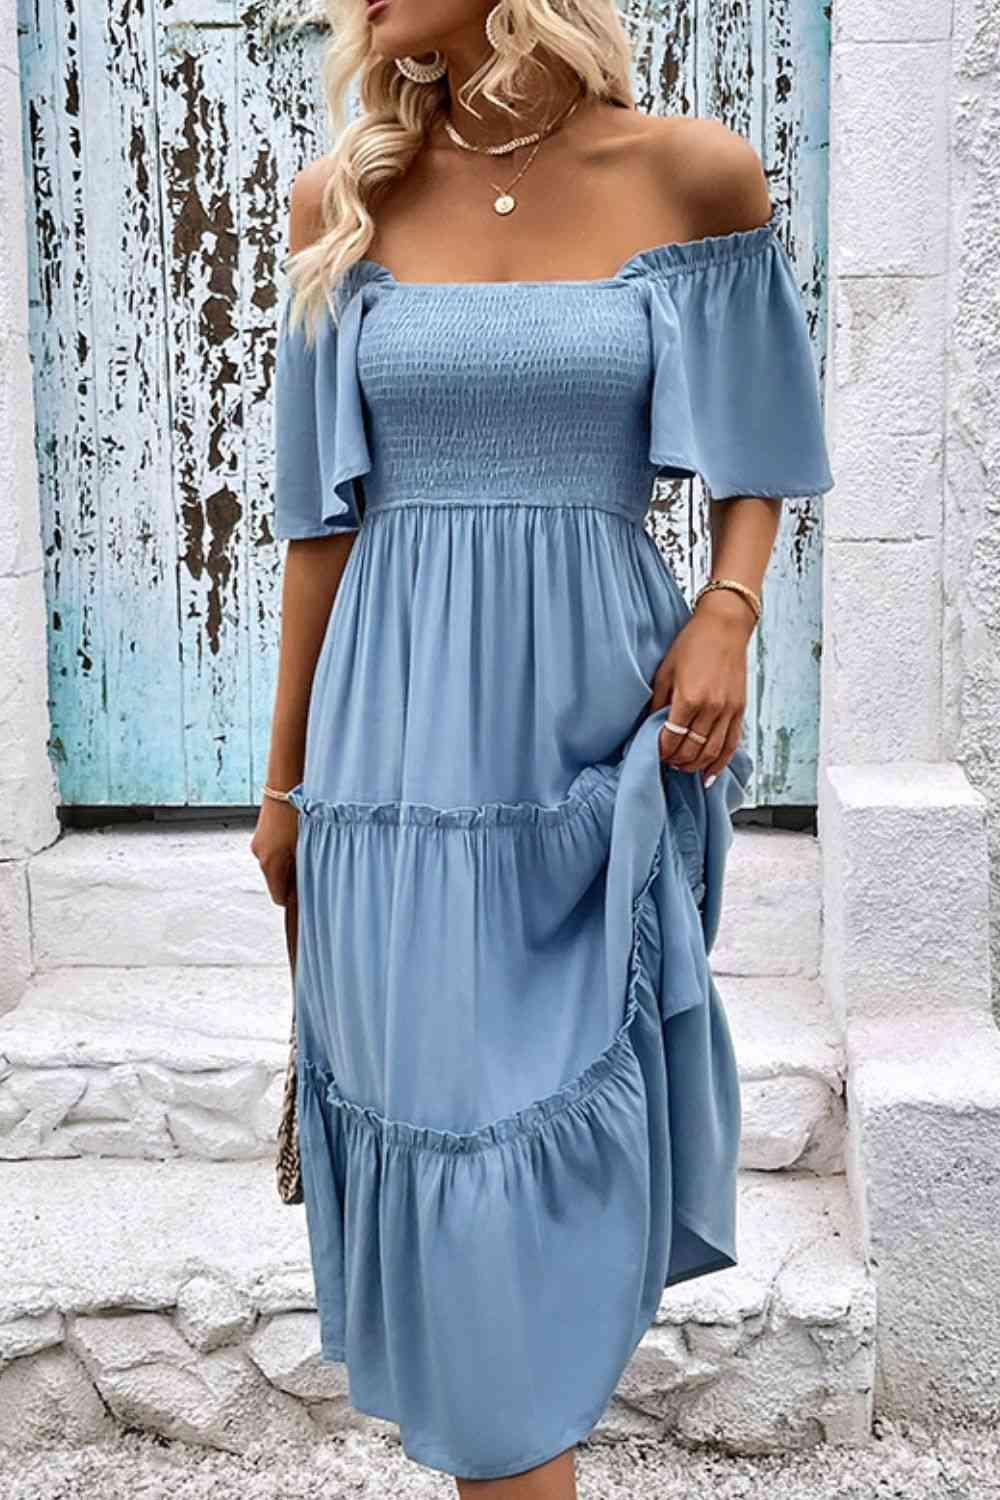 a woman wearing a blue off the shoulder dress